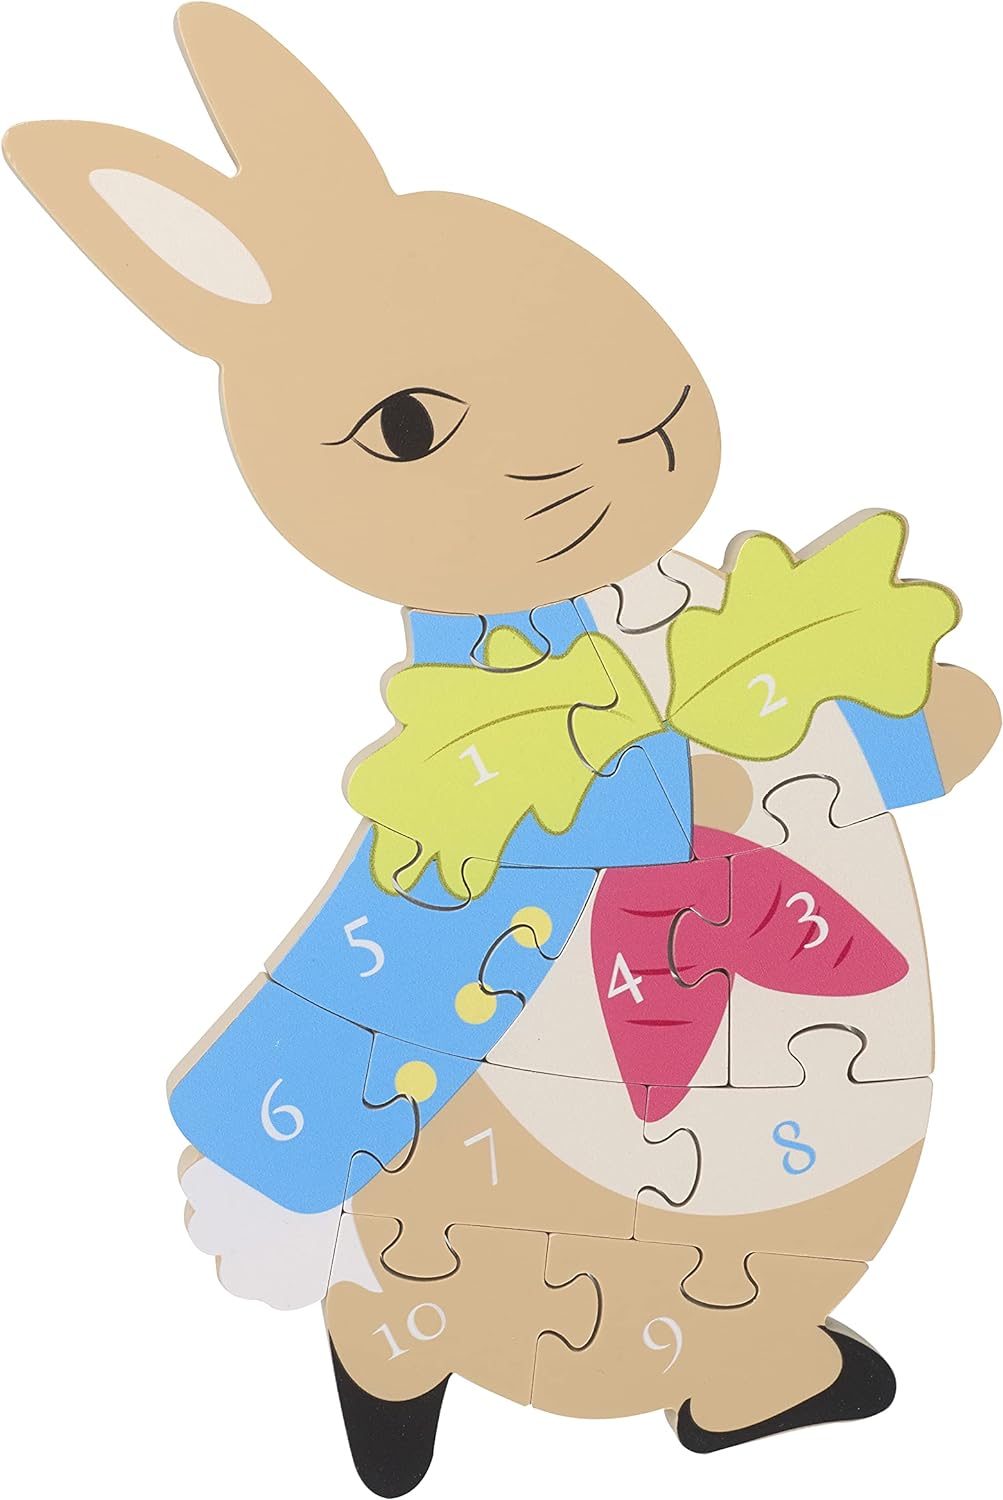 Peter Rabbit Number Puzzle